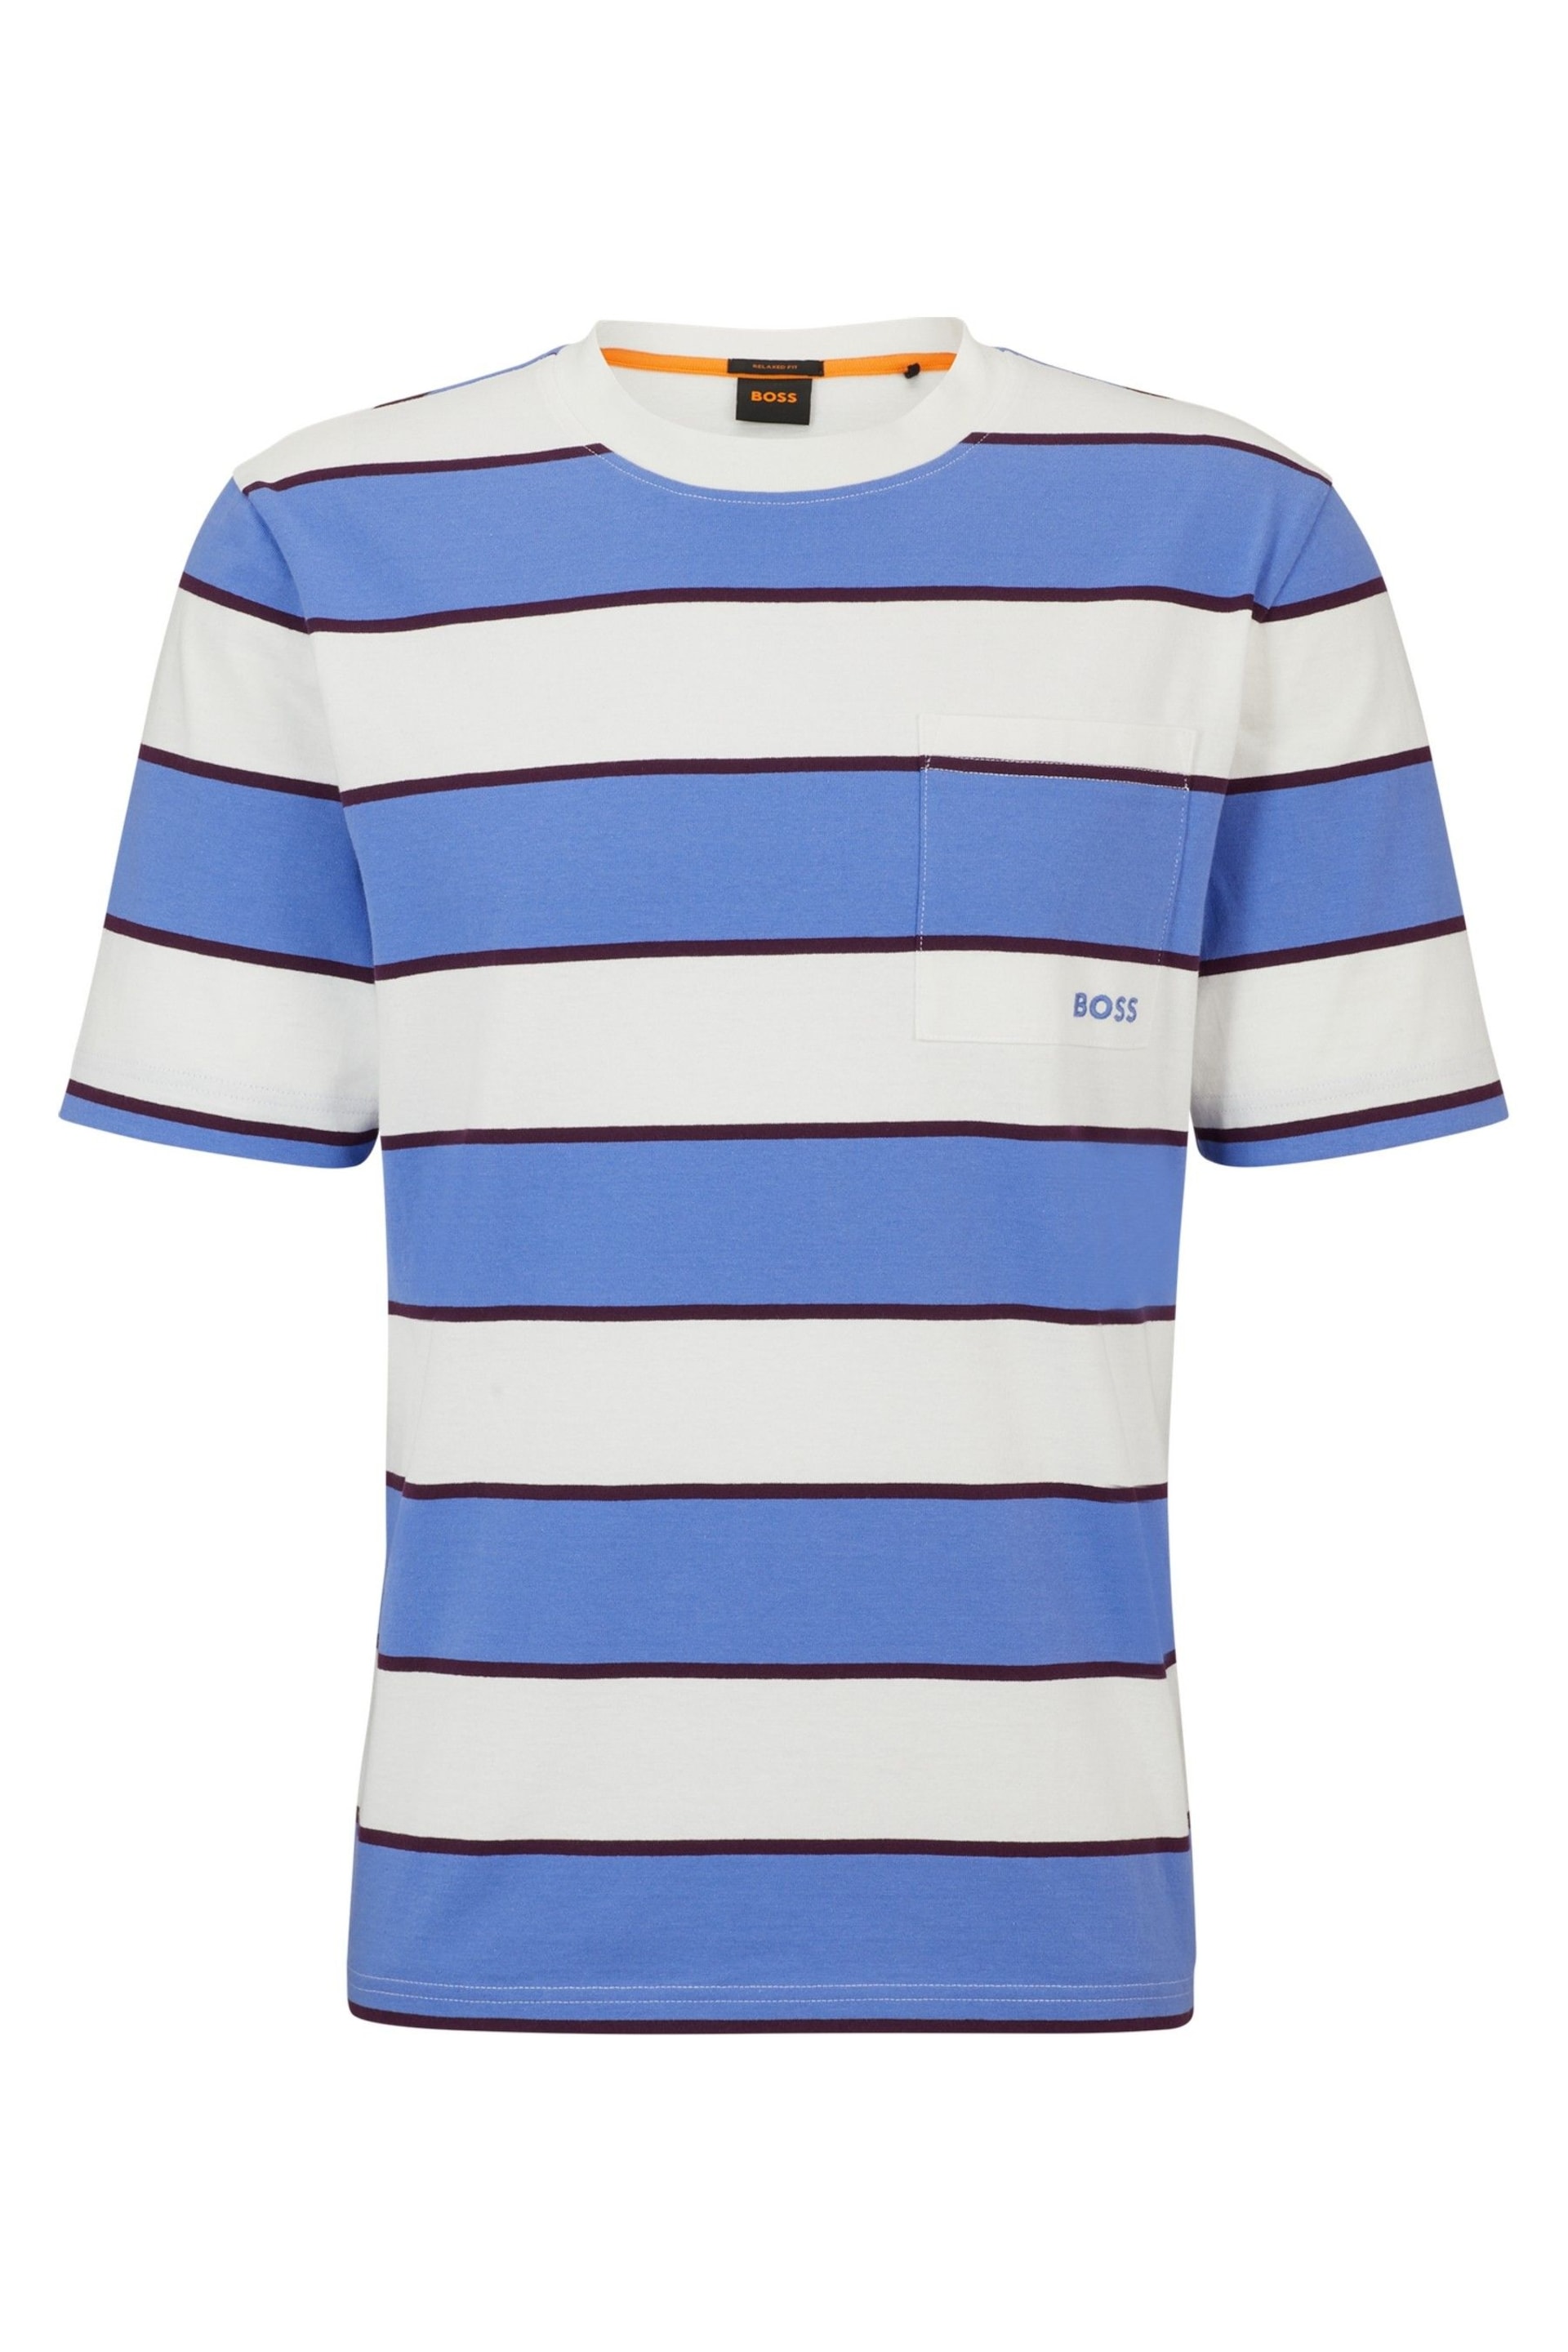 BOSS White/Purple Block Stripe Pocket T-Shirt - Image 6 of 6